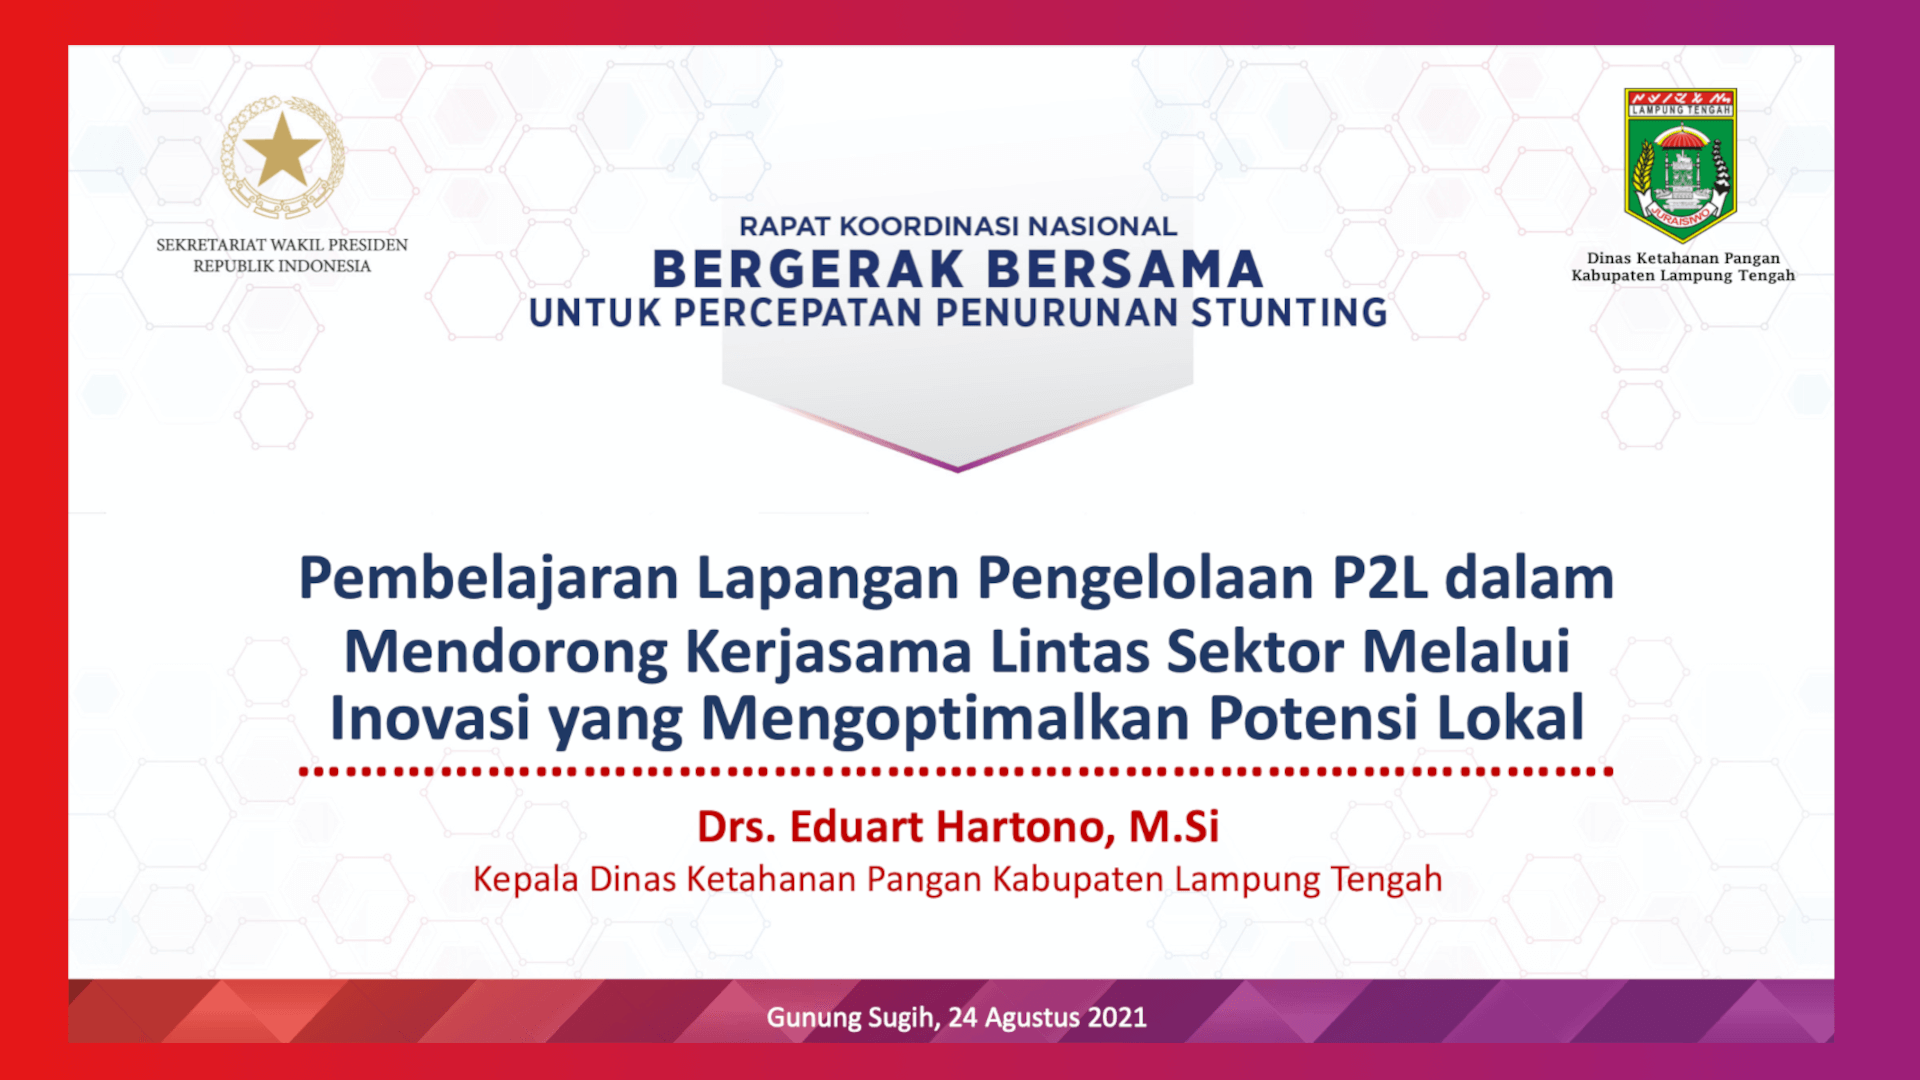 Drs. Eduart Hartono, M.Si – Pembelajaran Lapangan Pengelolaan P2L dalam Mendorong Kerjasama Lintas Sektor Melalui Inovasi yang Mengoptimalkan Potensi Lokal